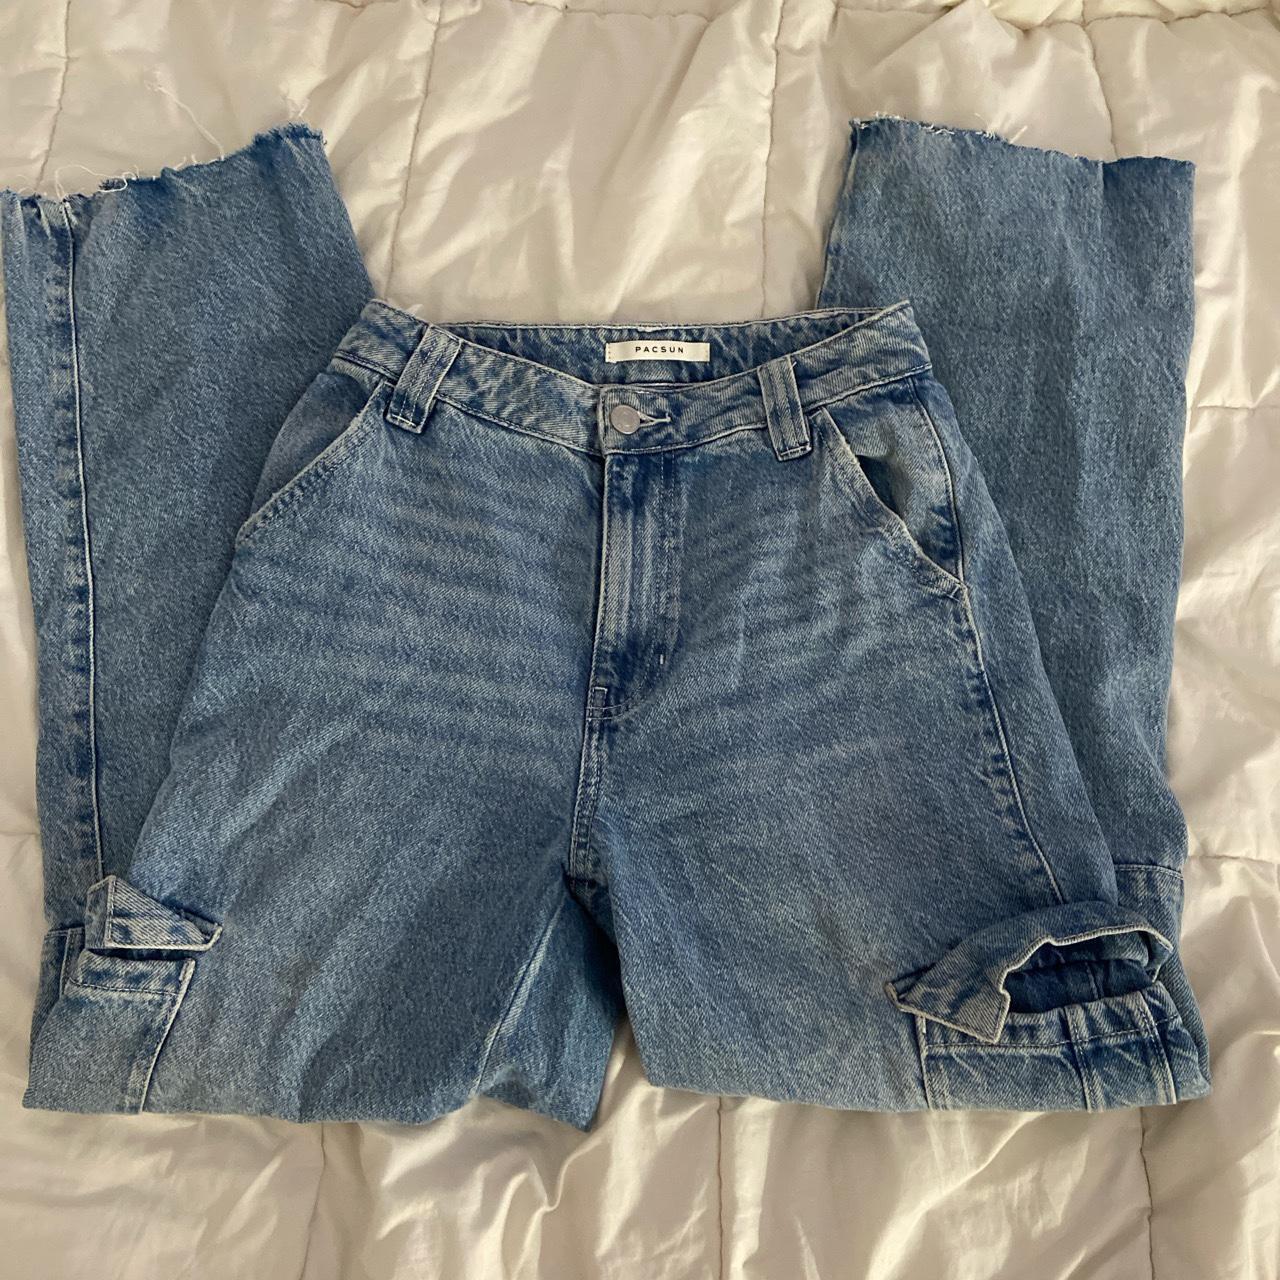 pacsun cargo jeans - size 24 - perfect condition - Depop